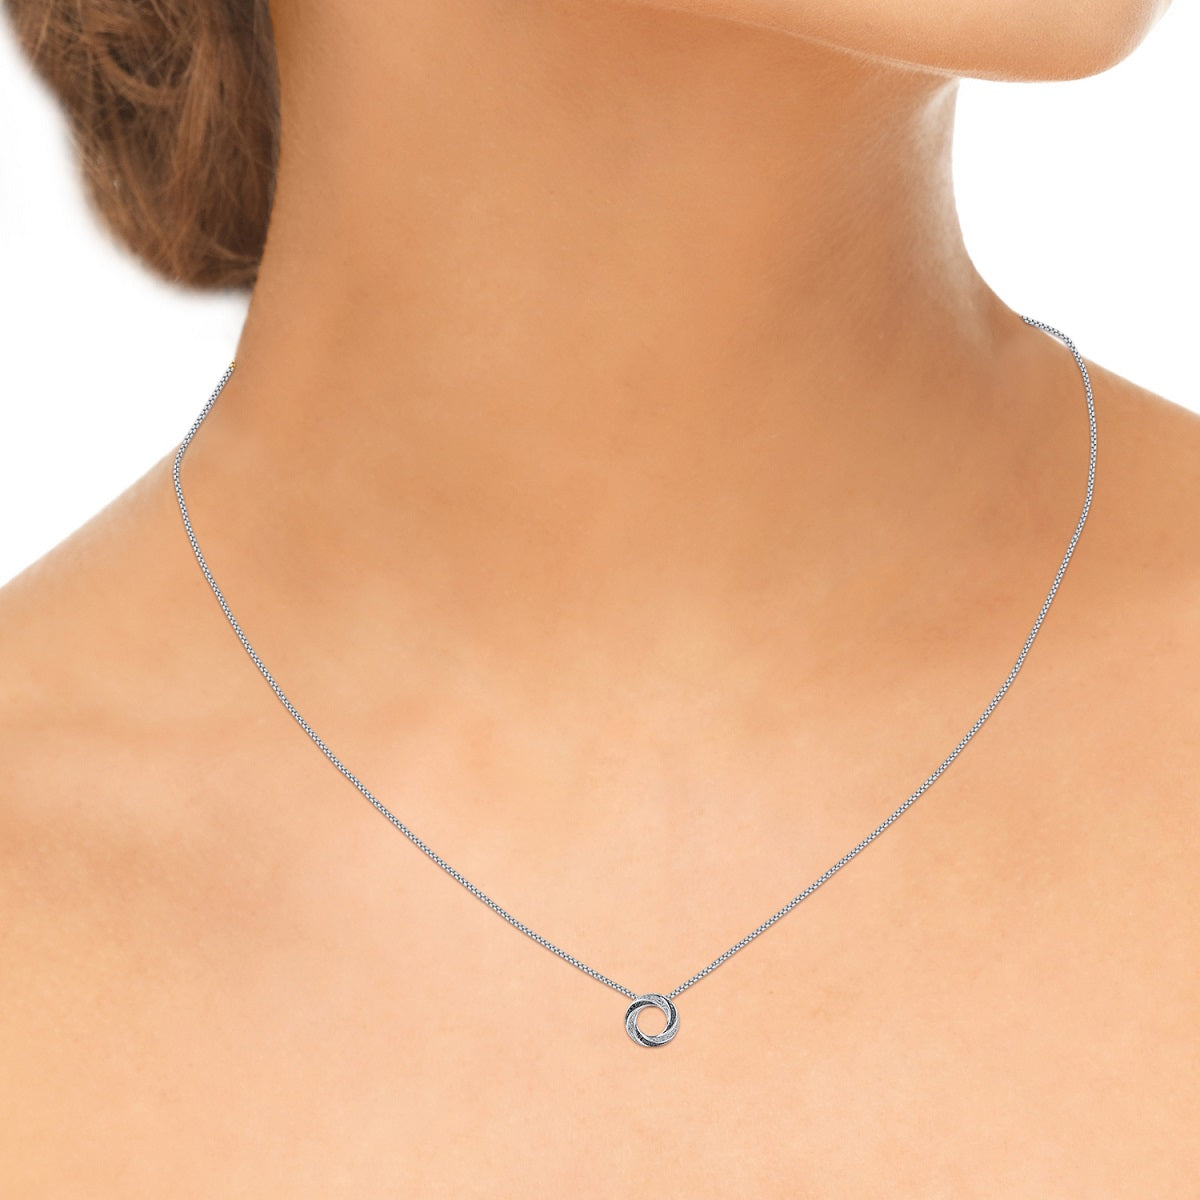 Treated Black Diamond Circular Swirl Pendant Necklace in 10K Gold